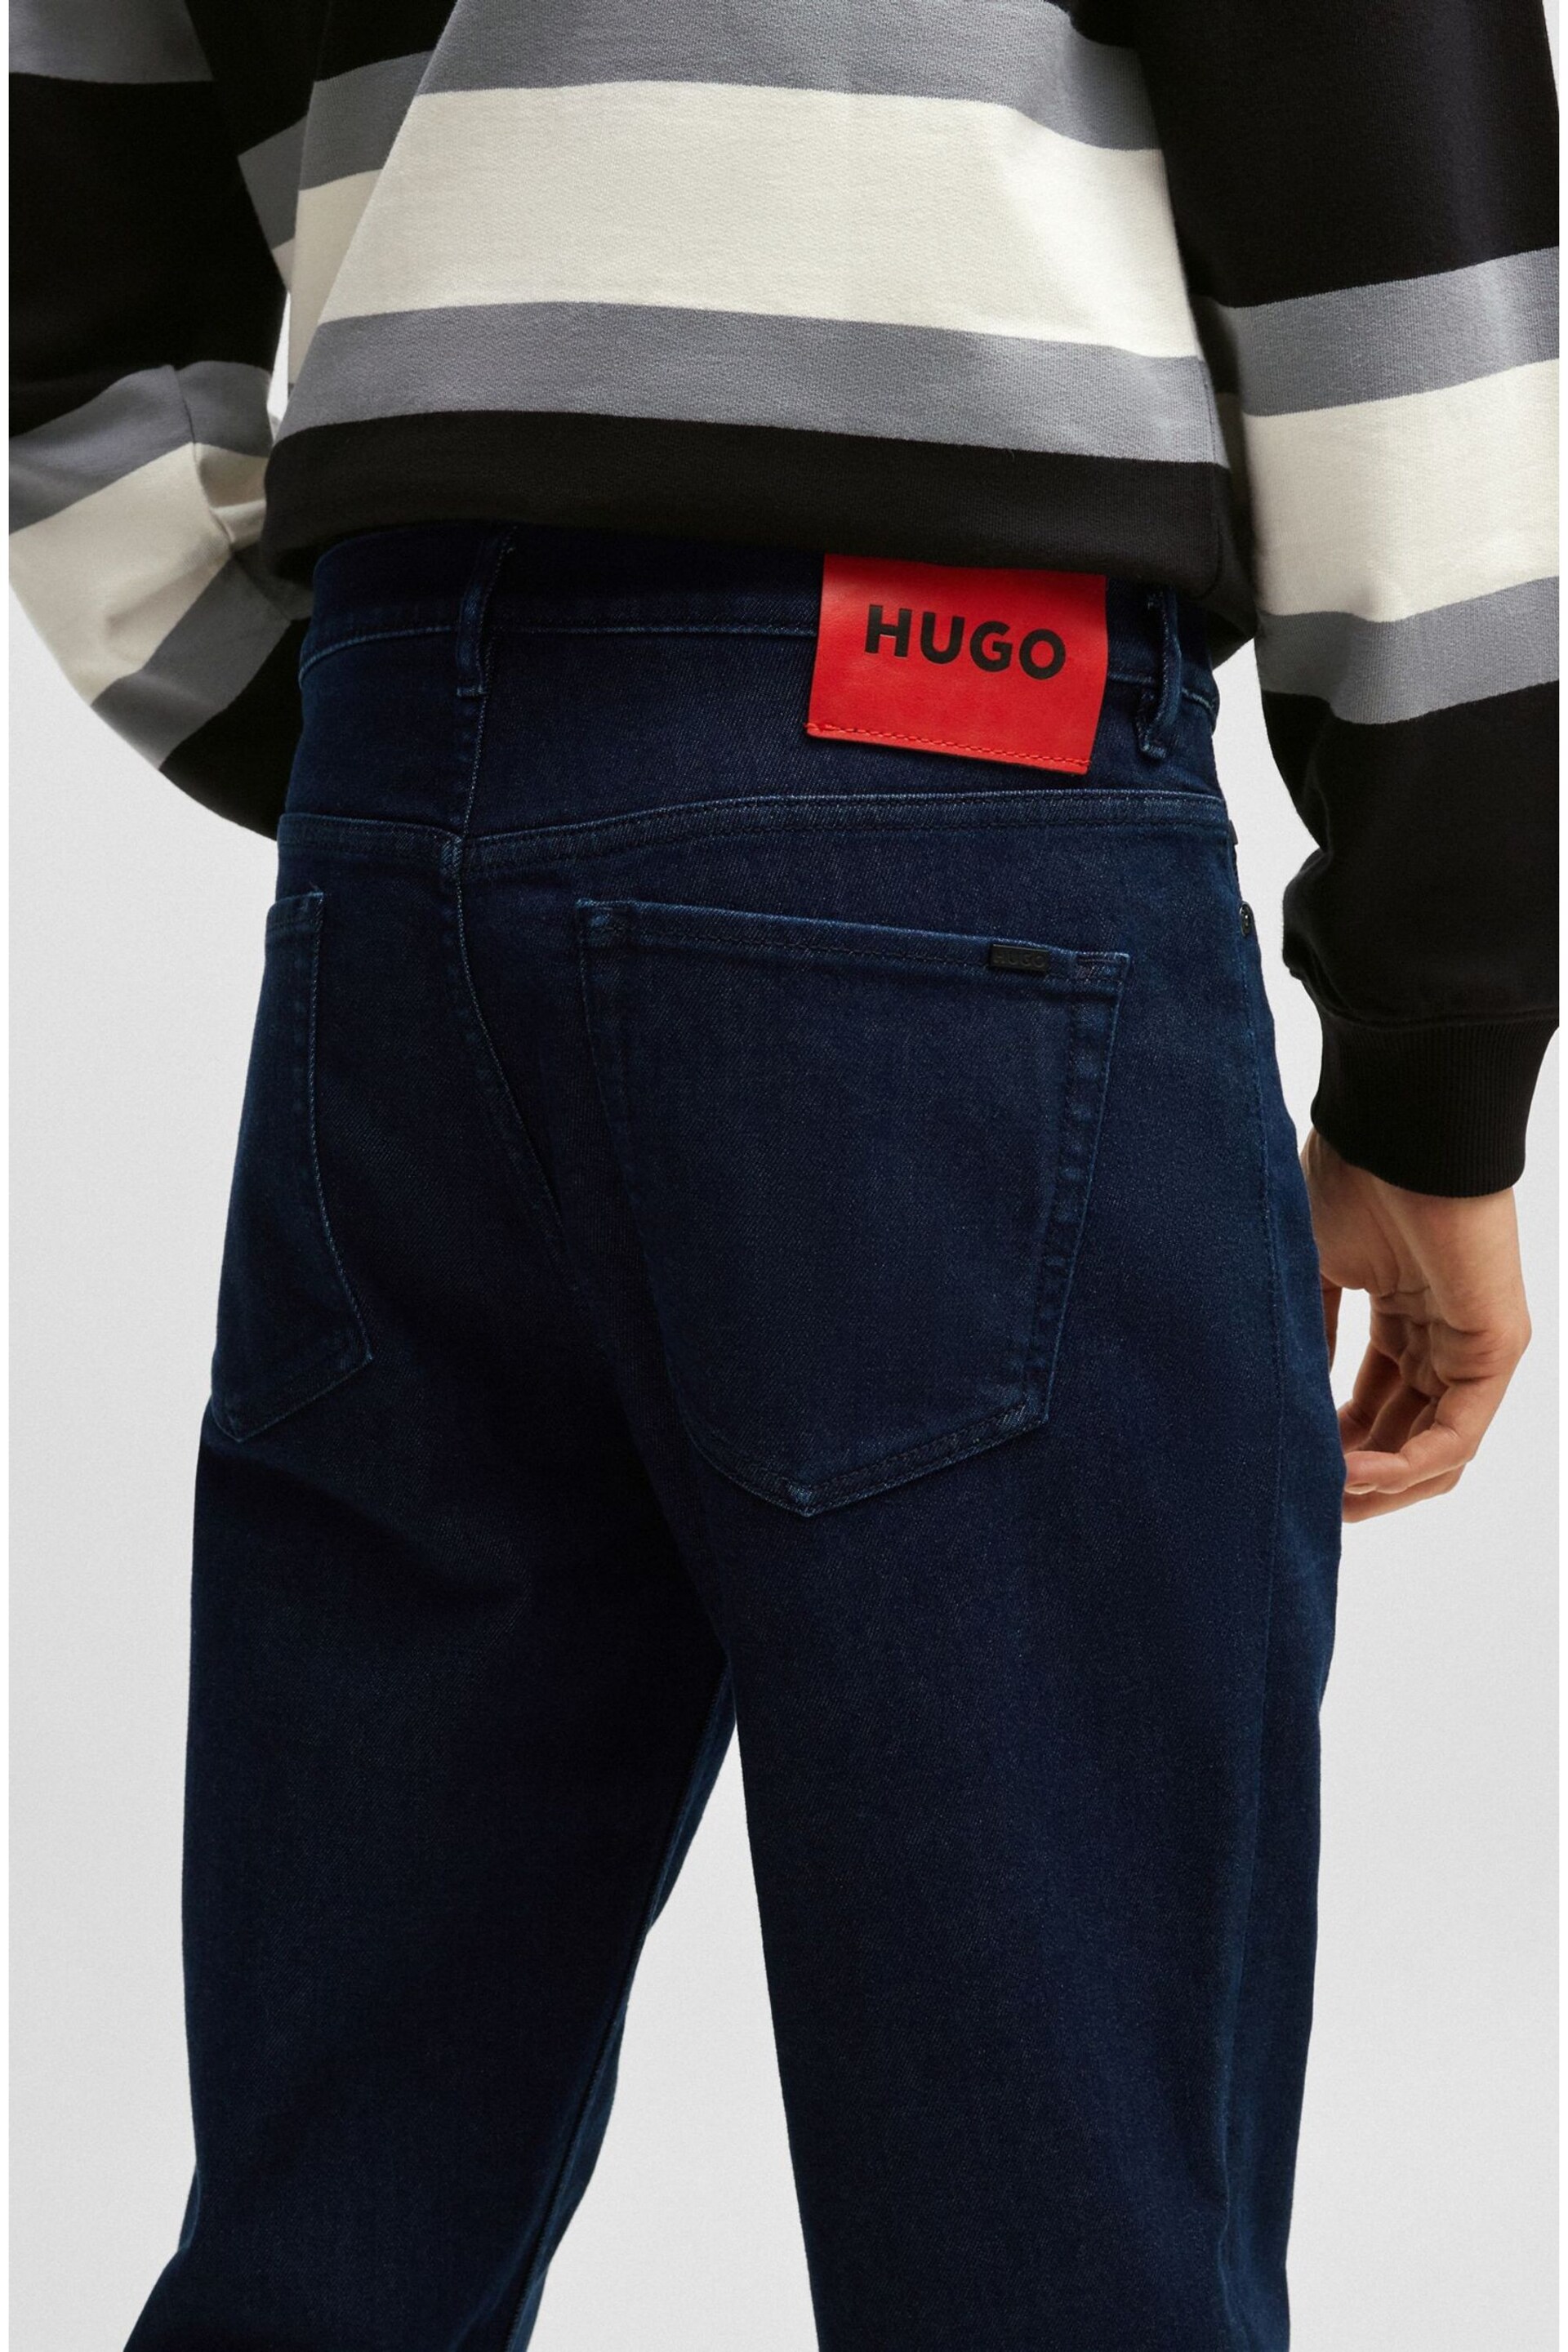 HUGO Tapered-Fit Jeans in Dark-Blue Comfort-Stretch Denim - Image 4 of 5